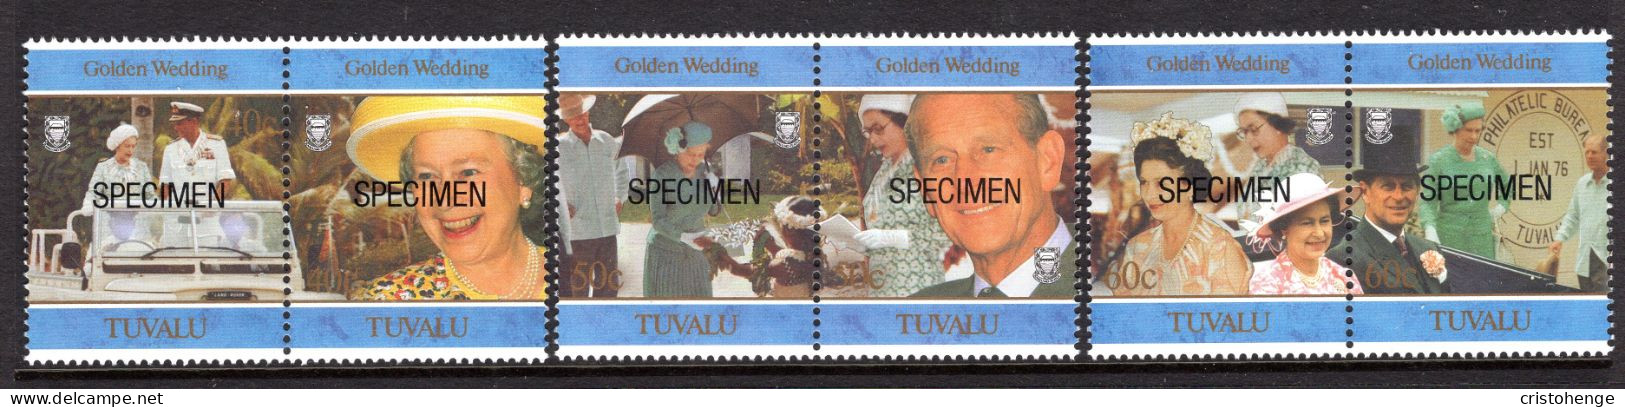 Tuvalu 1997 Royal Golden Wedding - SPECIMEN - Set MNH (SG 791-796) - Tuvalu